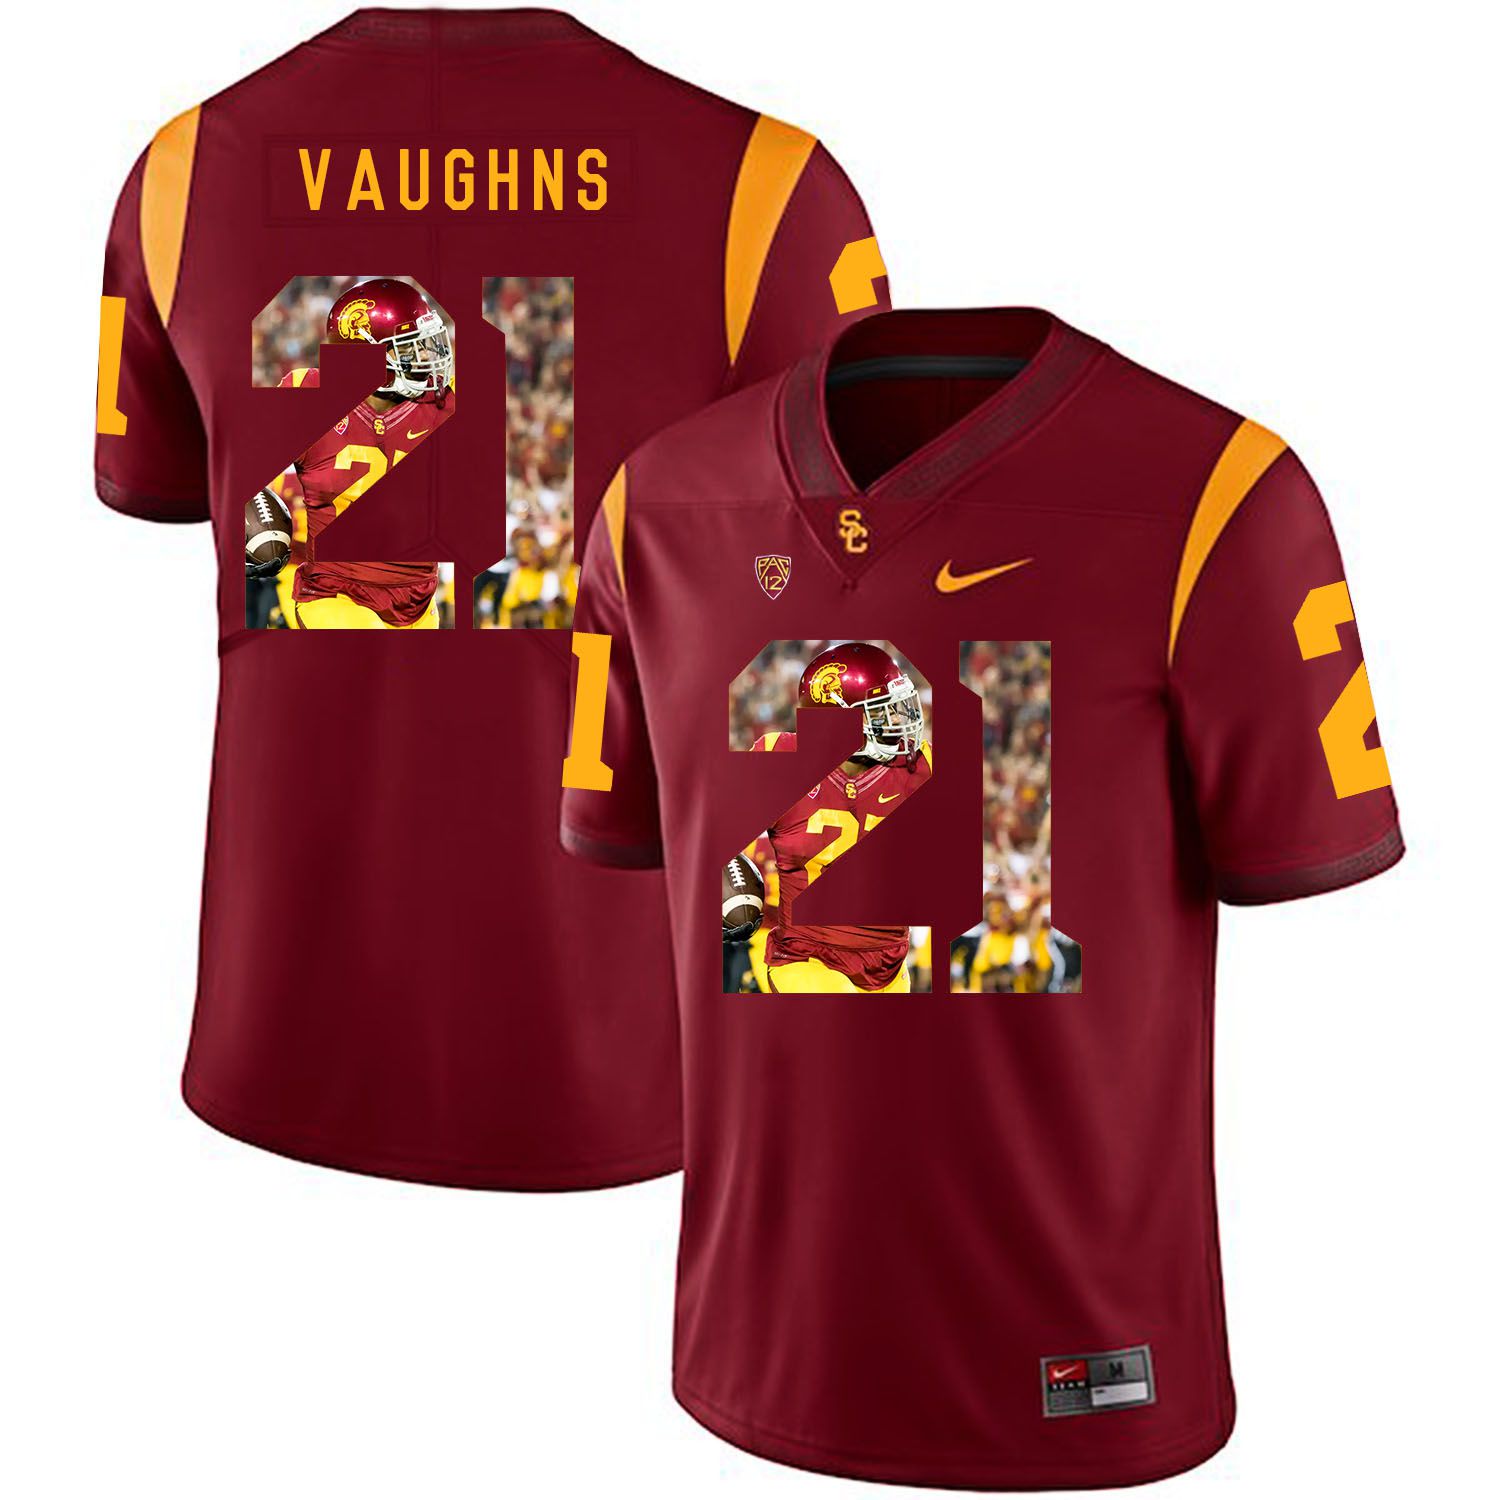 Men USC Trojans #21 Vaughns Red Fashion Edition Customized NCAA Jerseys